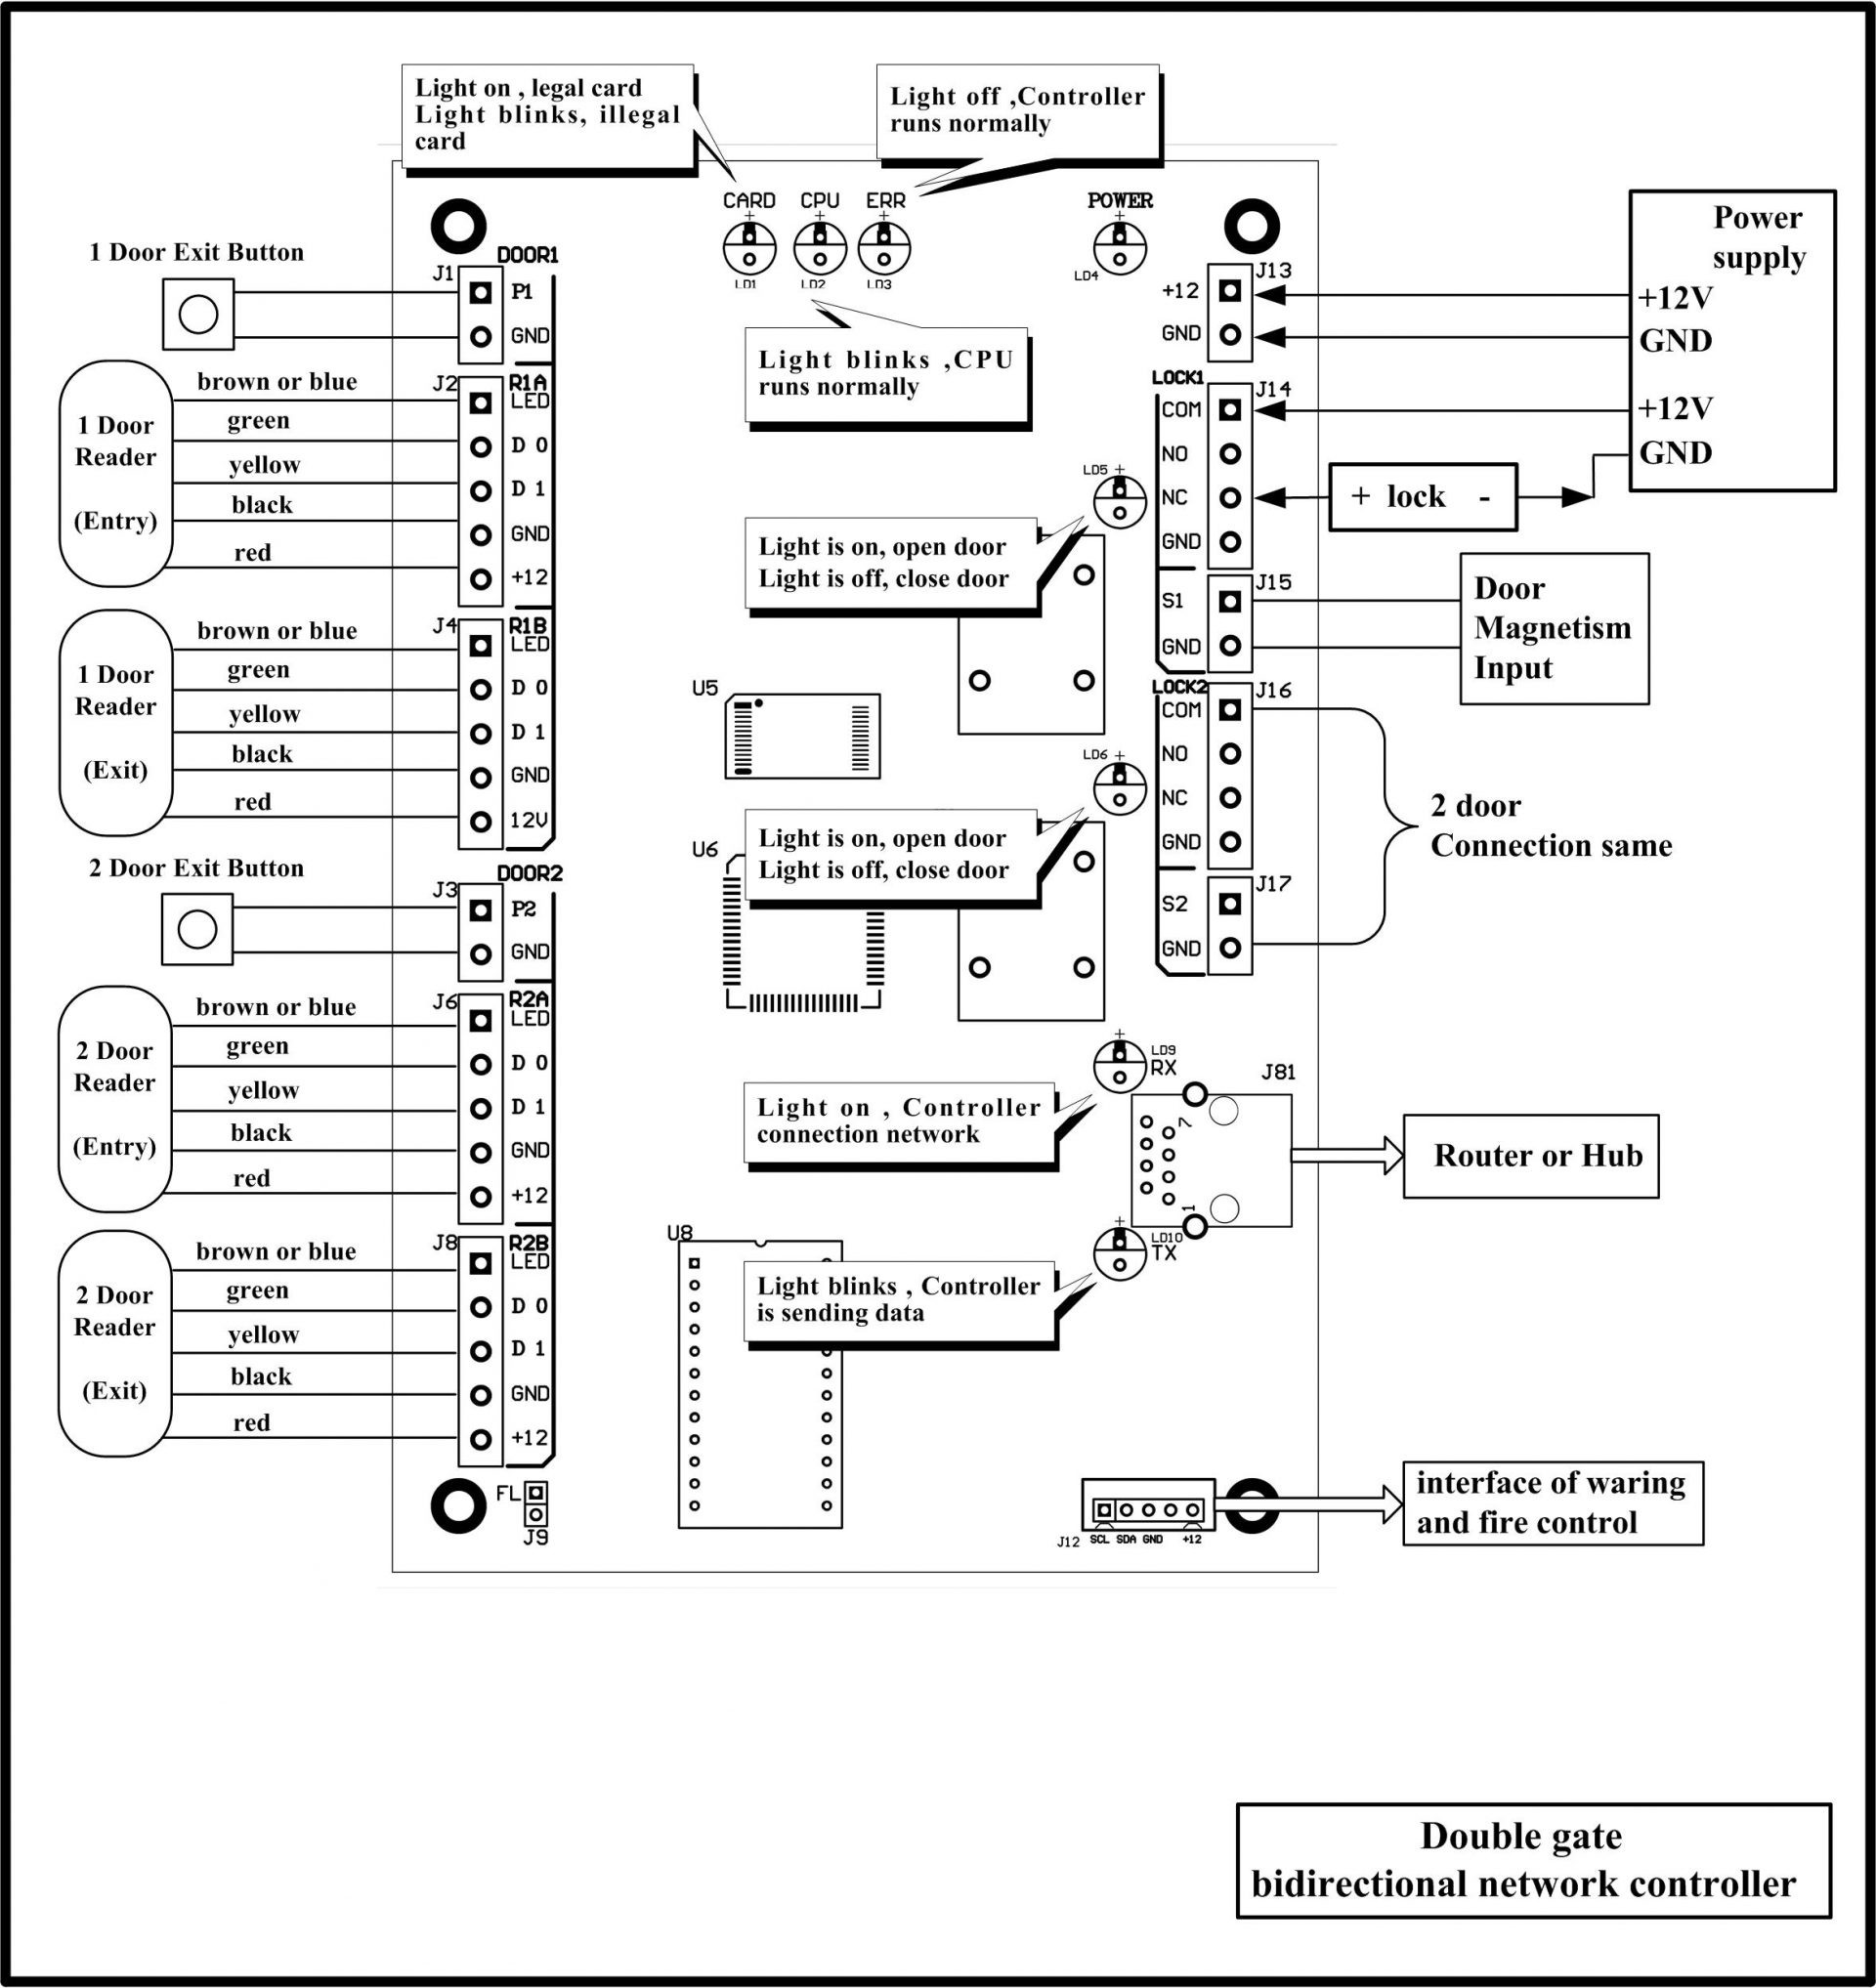 Lenel 2220 Wiring Diagram Lenel Access Control Wiring Diagram Of Lenel 2220 Wiring Diagram